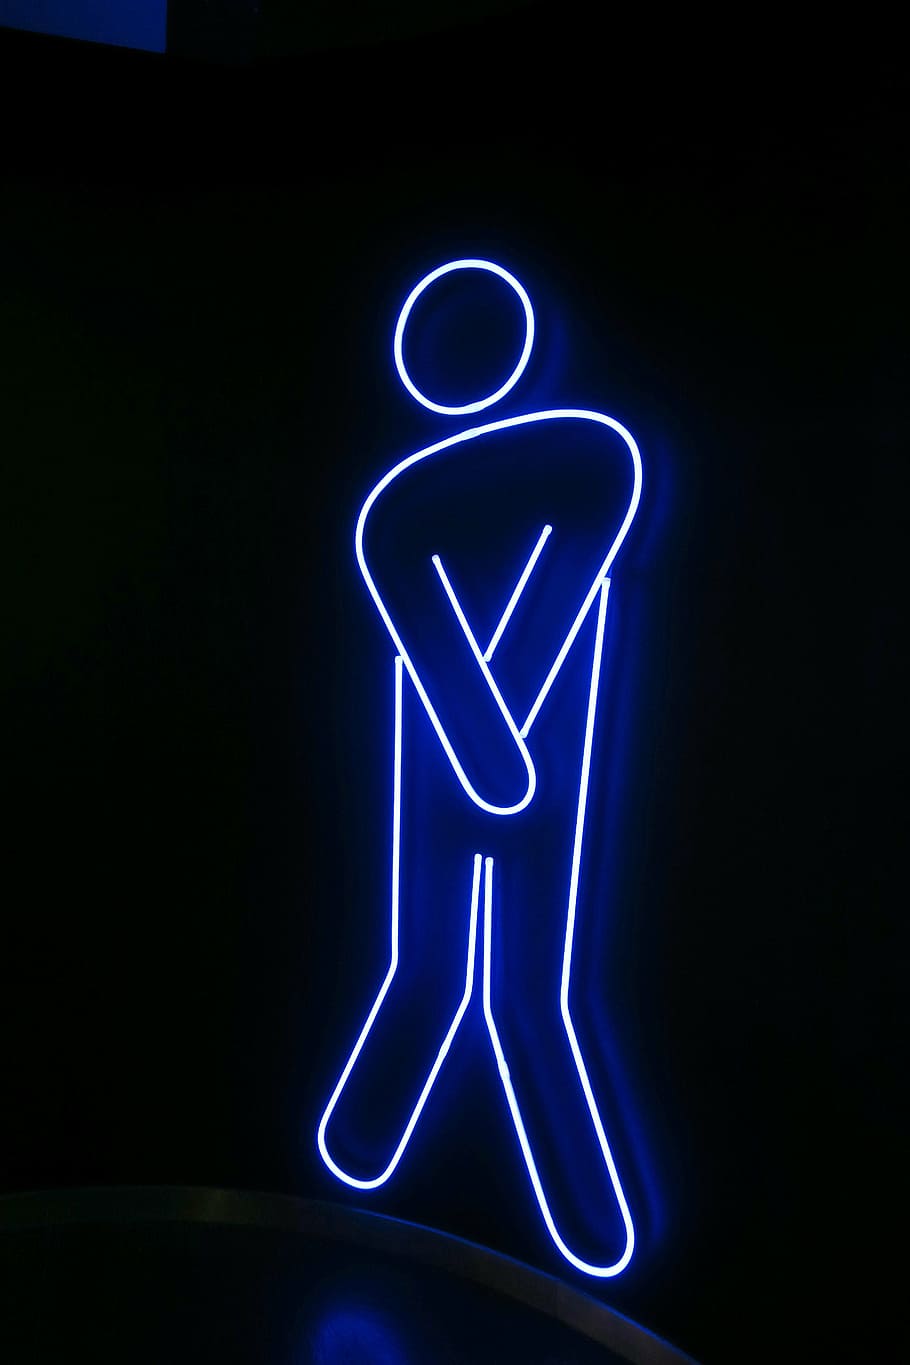 graphics, man, logo, character, illuminated, neon, black background, blue, sign, lighting equipment